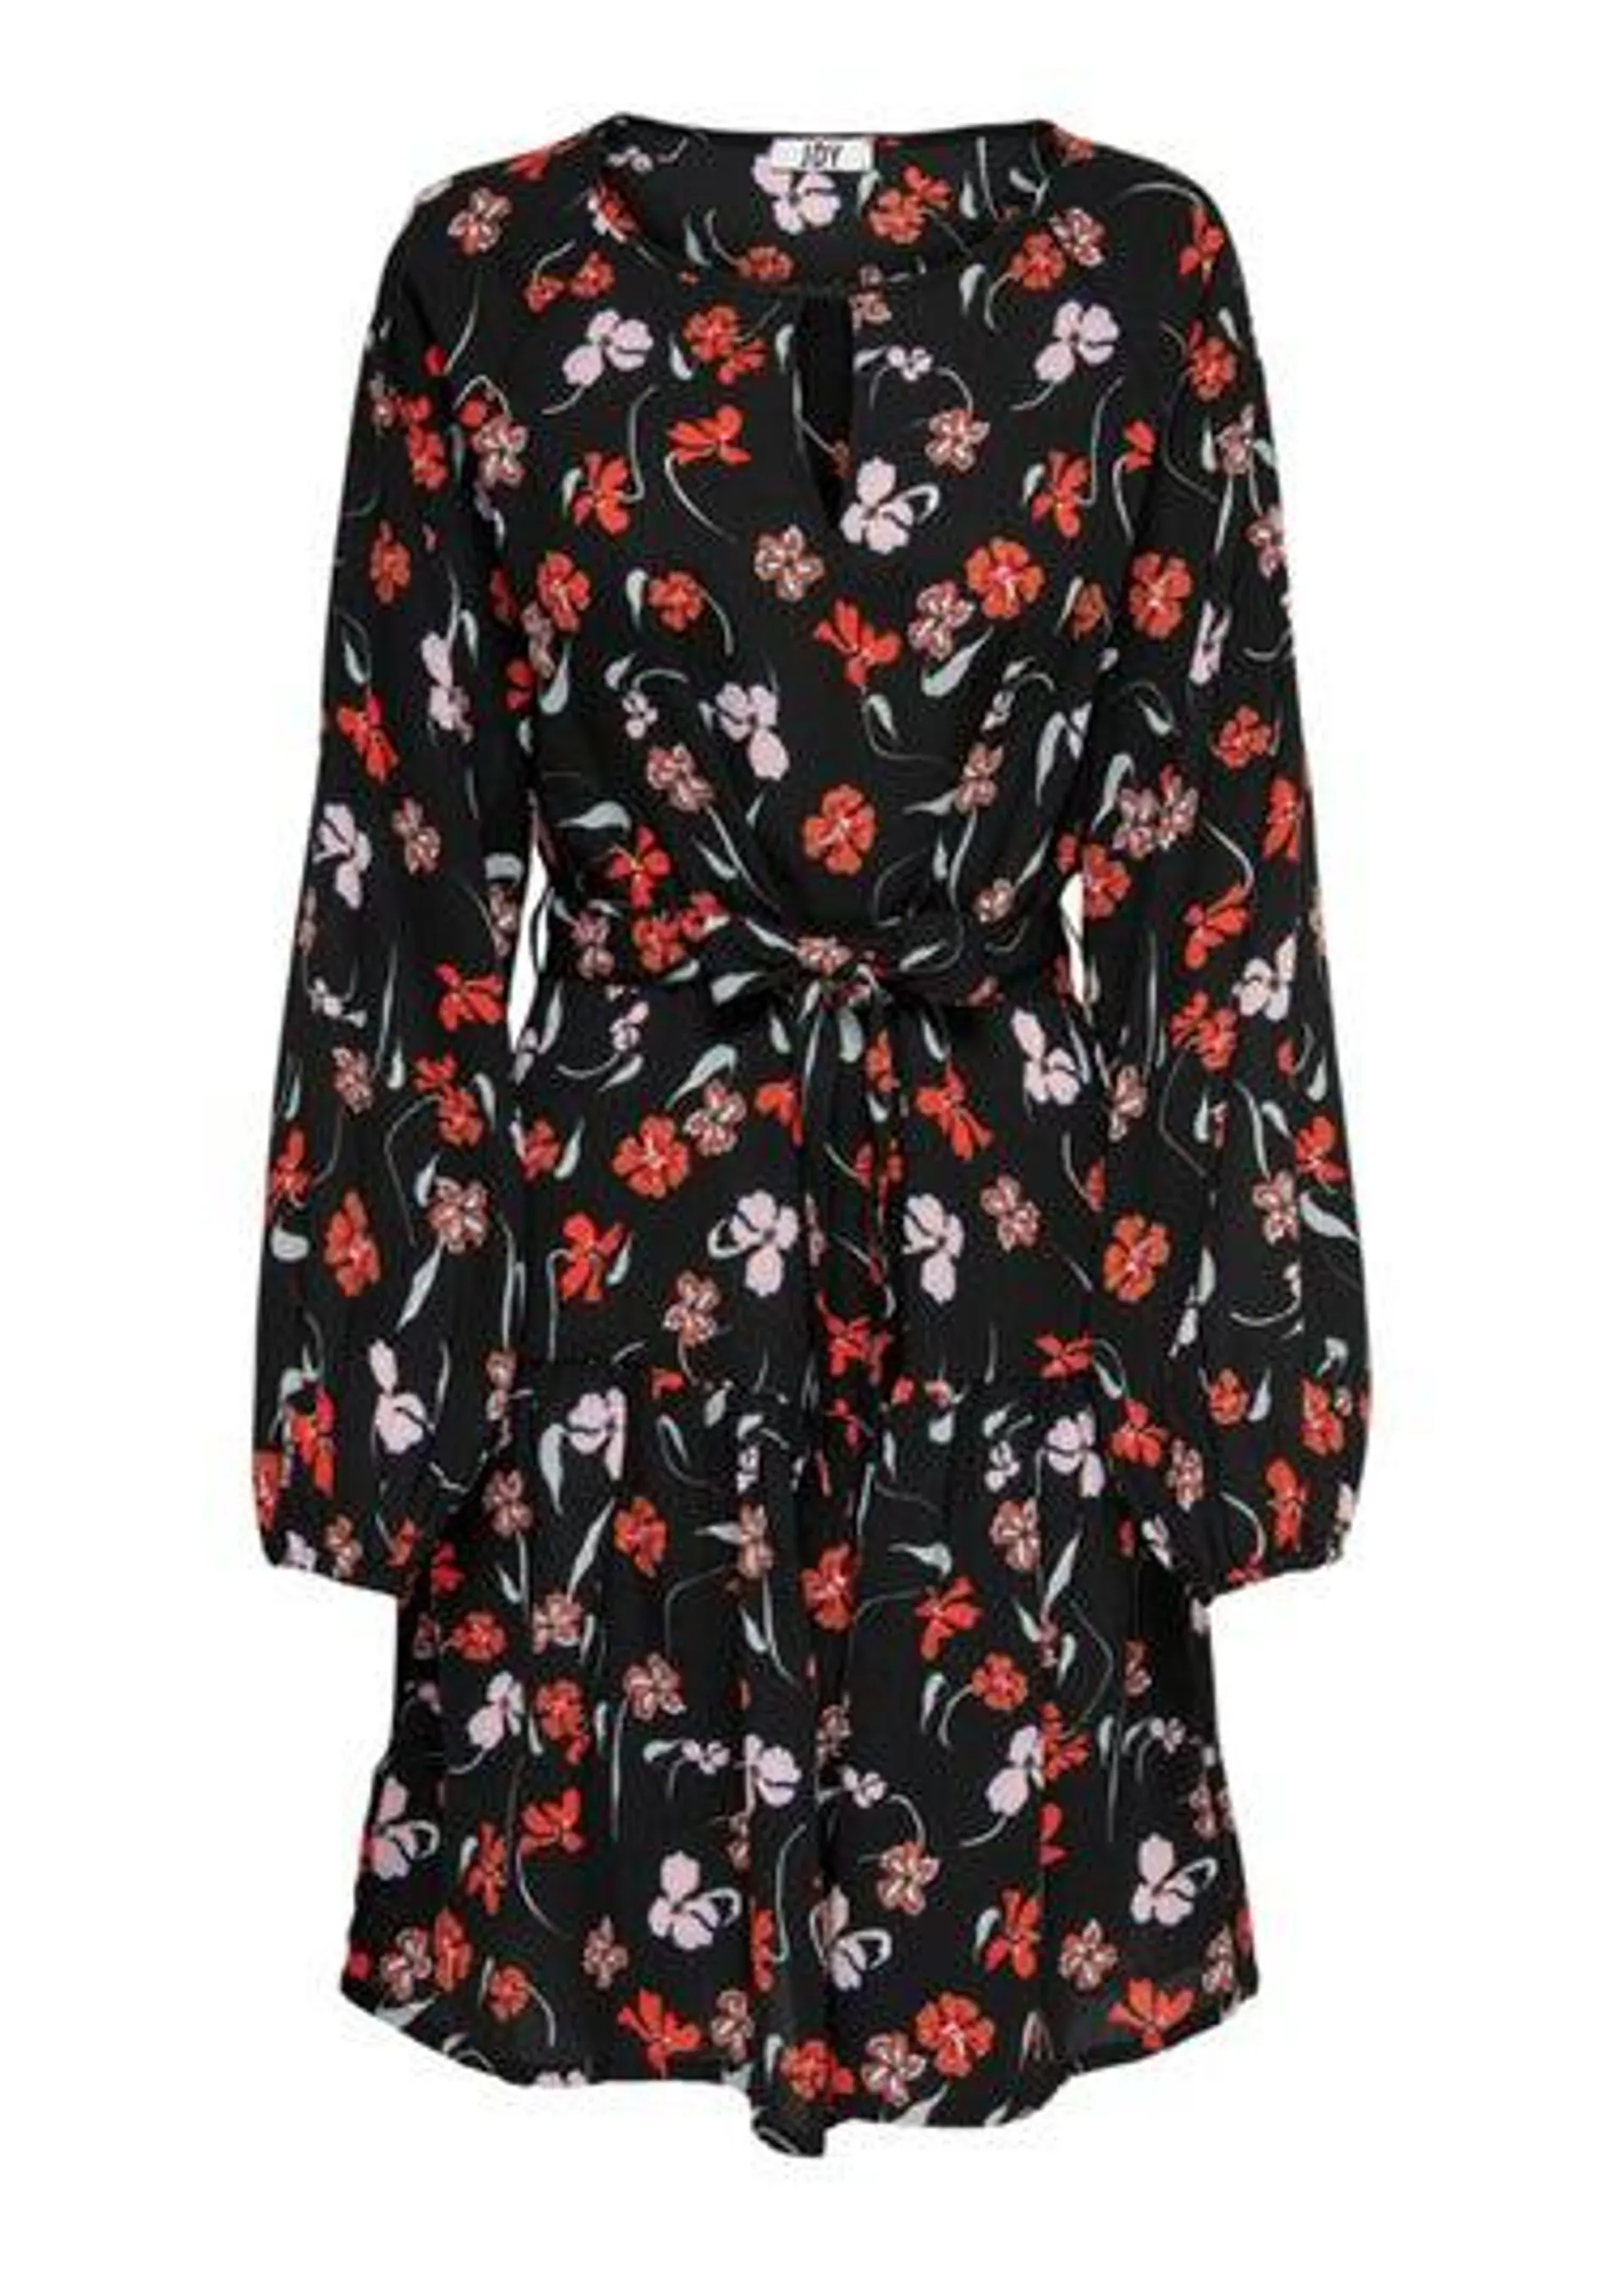 JDY Edith Black Floral Long Sleeve Dress - L - UK 12